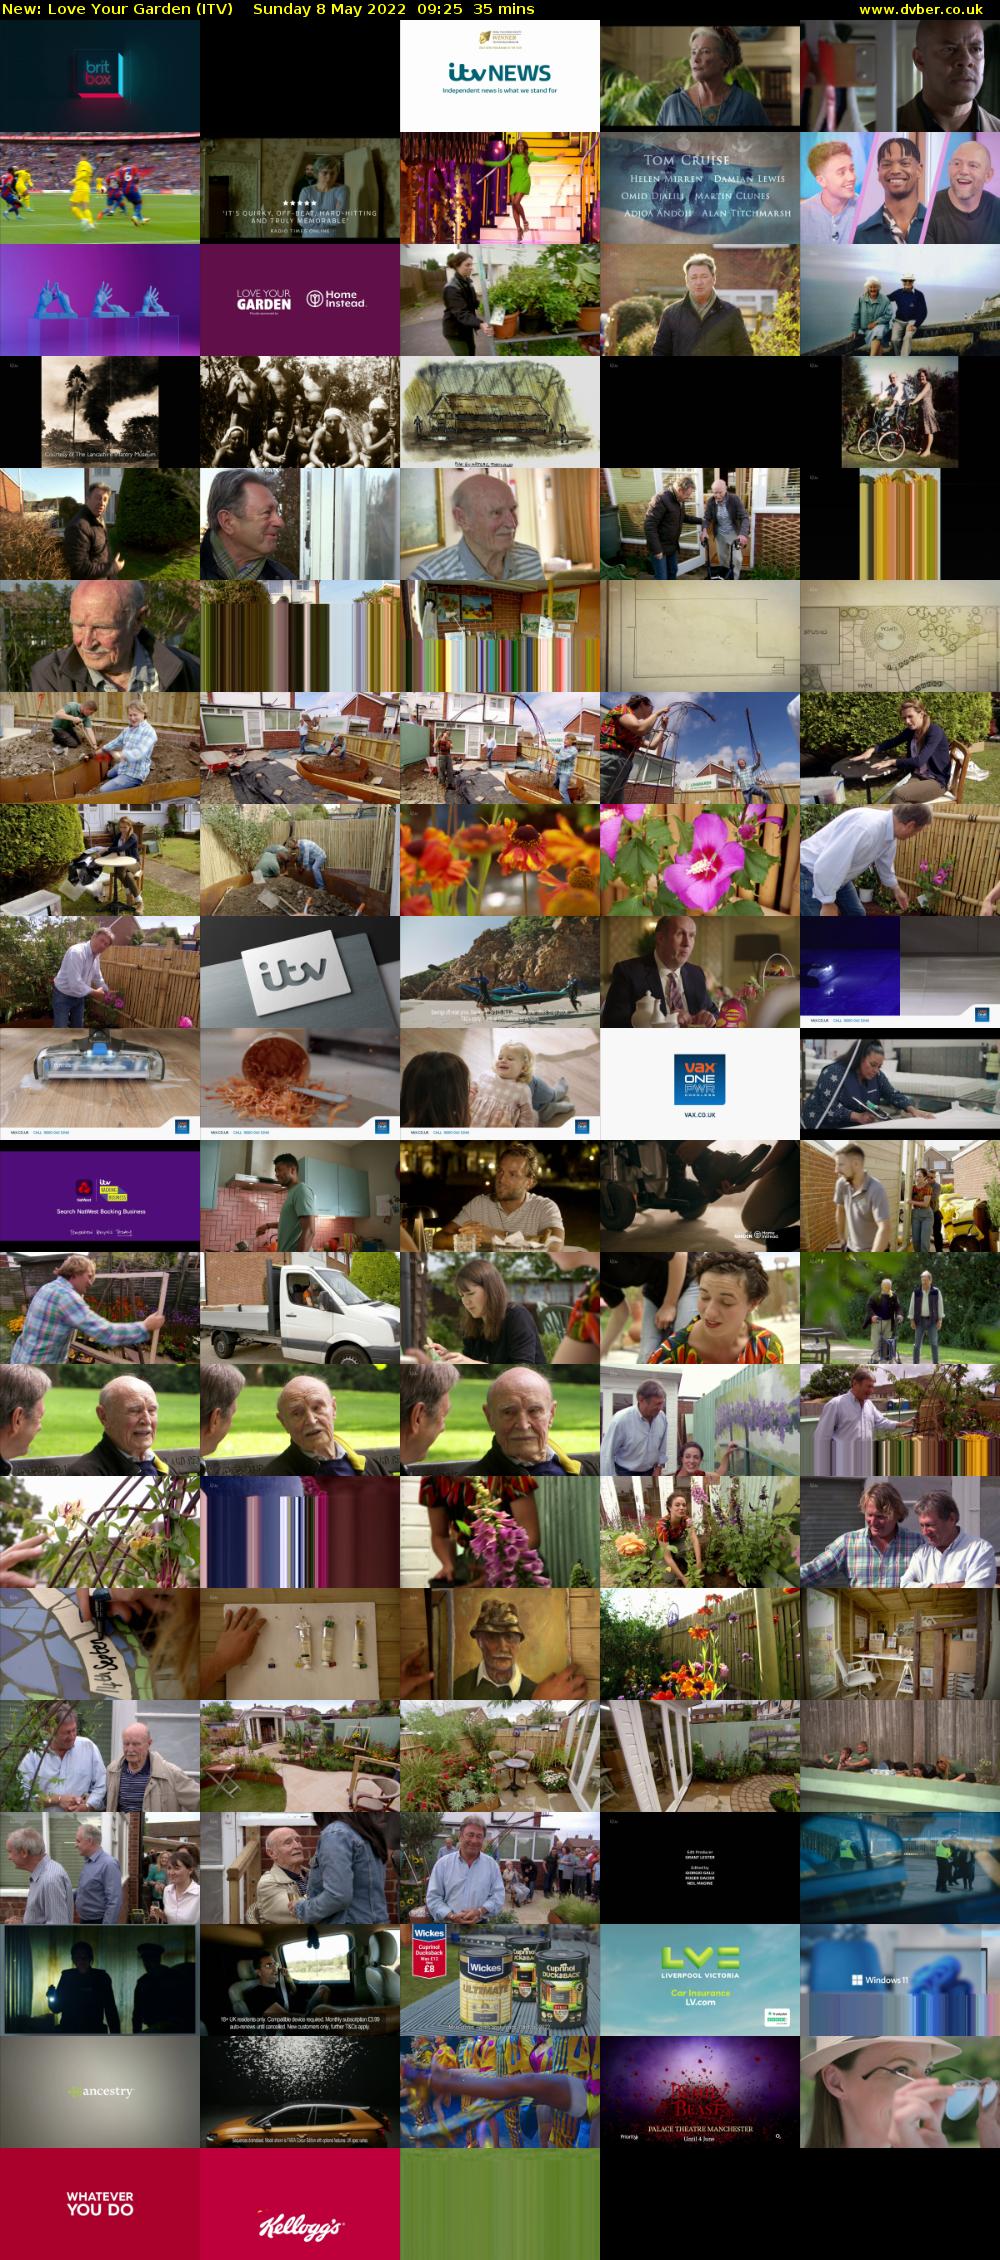 Love Your Garden (ITV) Sunday 8 May 2022 09:25 - 10:00